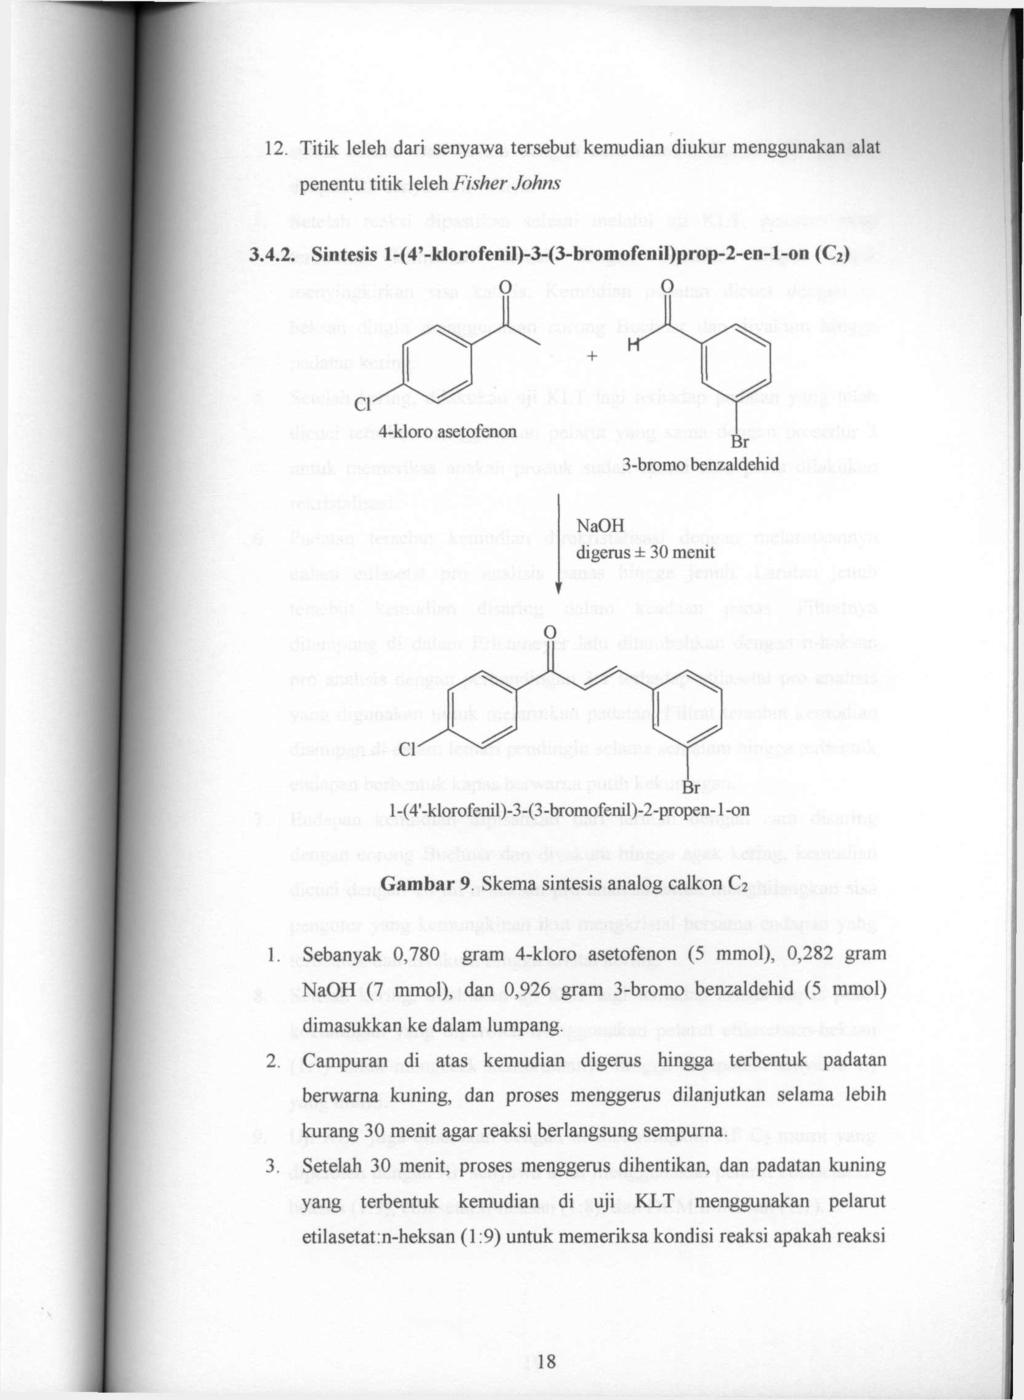 12. Titik leleh dari senyawa tersebut kemudian diukur menggunakan alat penentu titik leleh Fisher Johns 3.4.2. Sintesis l-(4'-kiorofenil)-3-(3-bromofenii)prop-2-en-l-on (C2) 1-(4'-klorofenil)-3-(3-bromofeml)-2-propen-1-on Gambar 9.